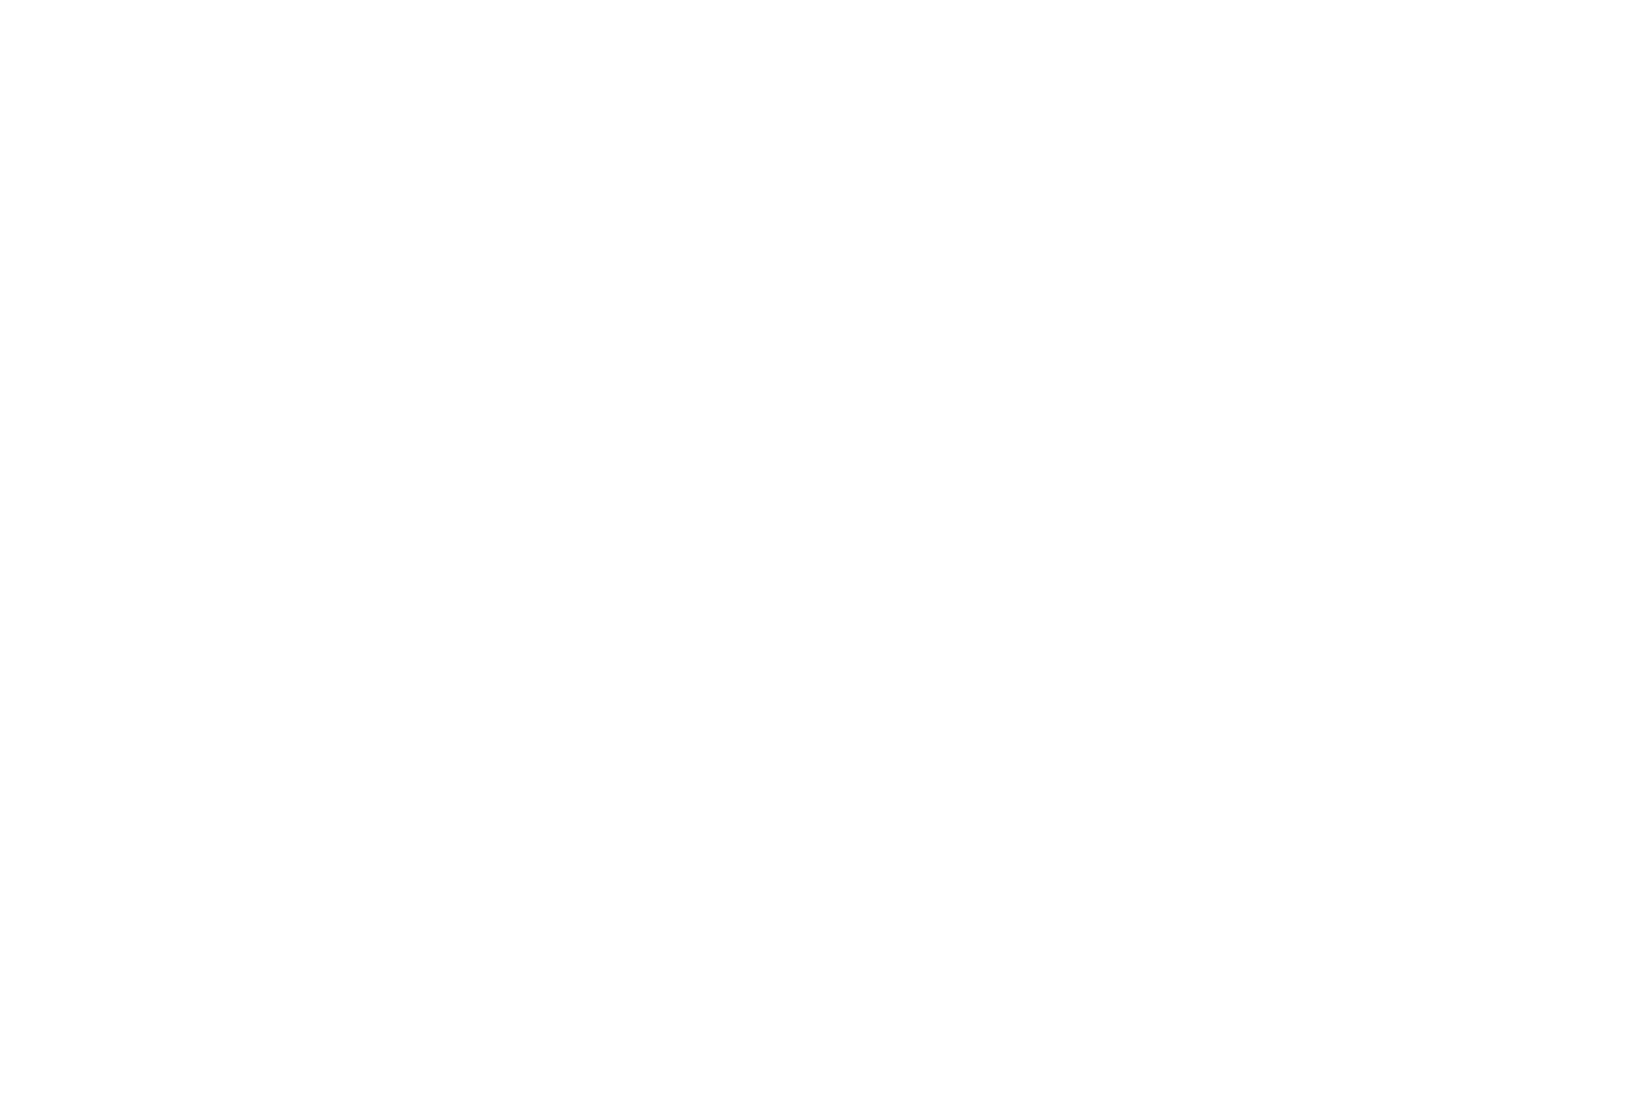 Firefall Ranch - Yosemite National Park